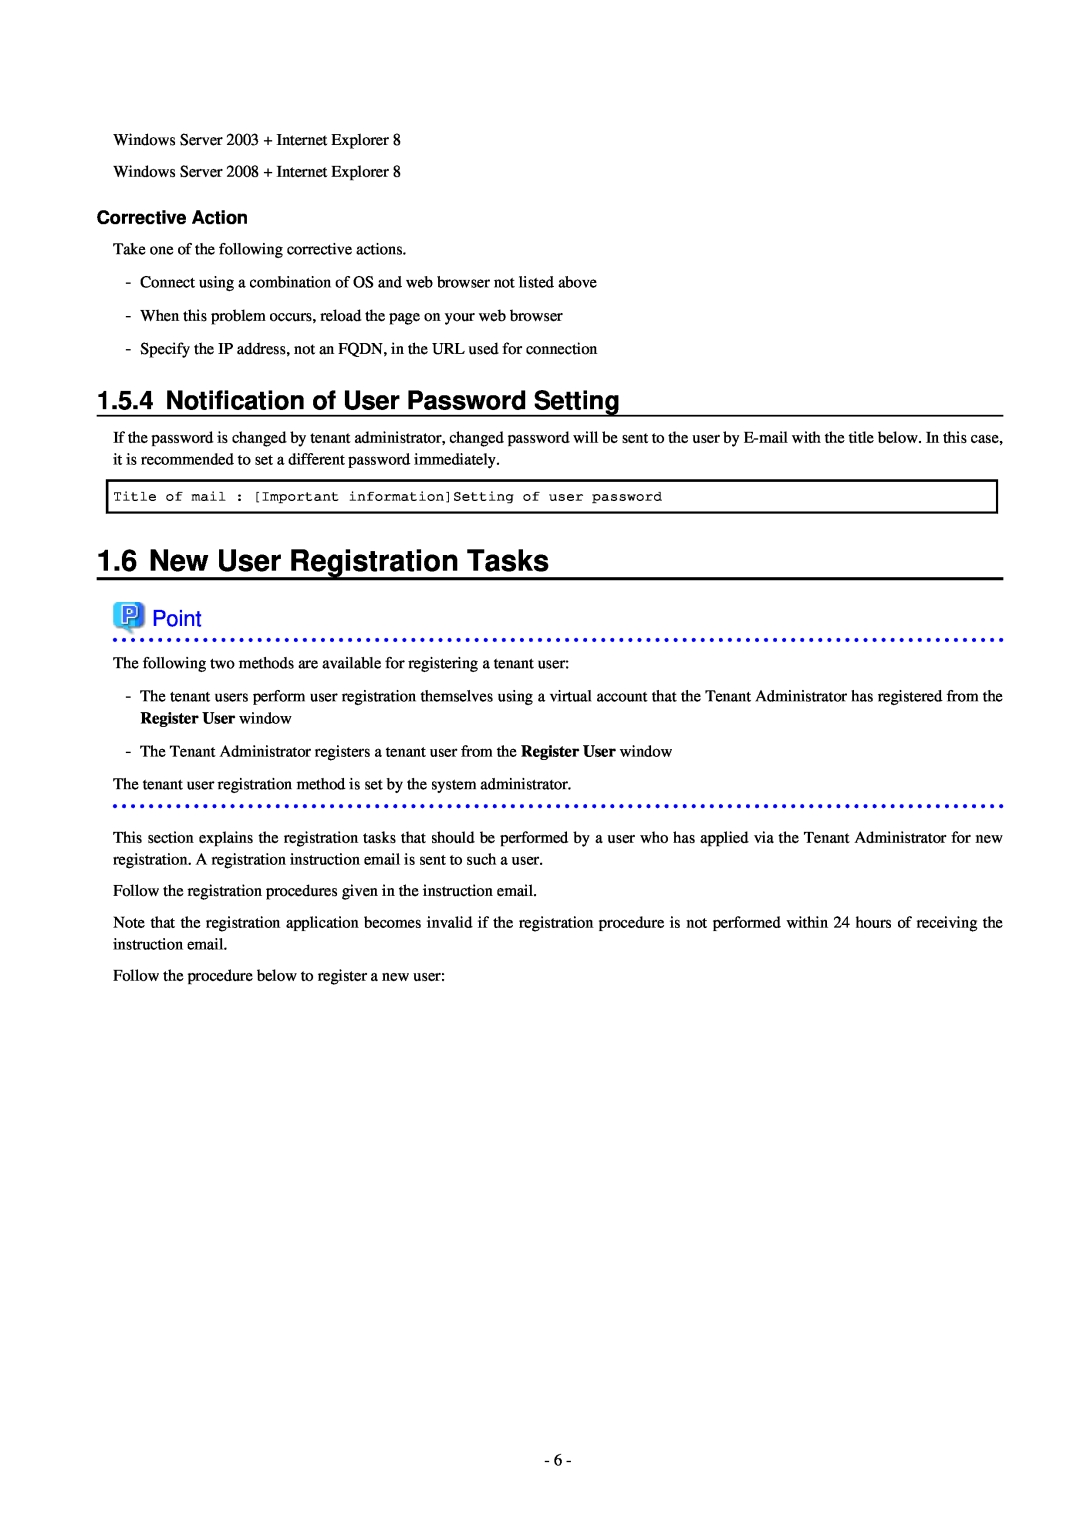 Fujitsu V3.0.0 manual New User Registration Tasks, Notification of User Password Setting, Corrective Action, Point 